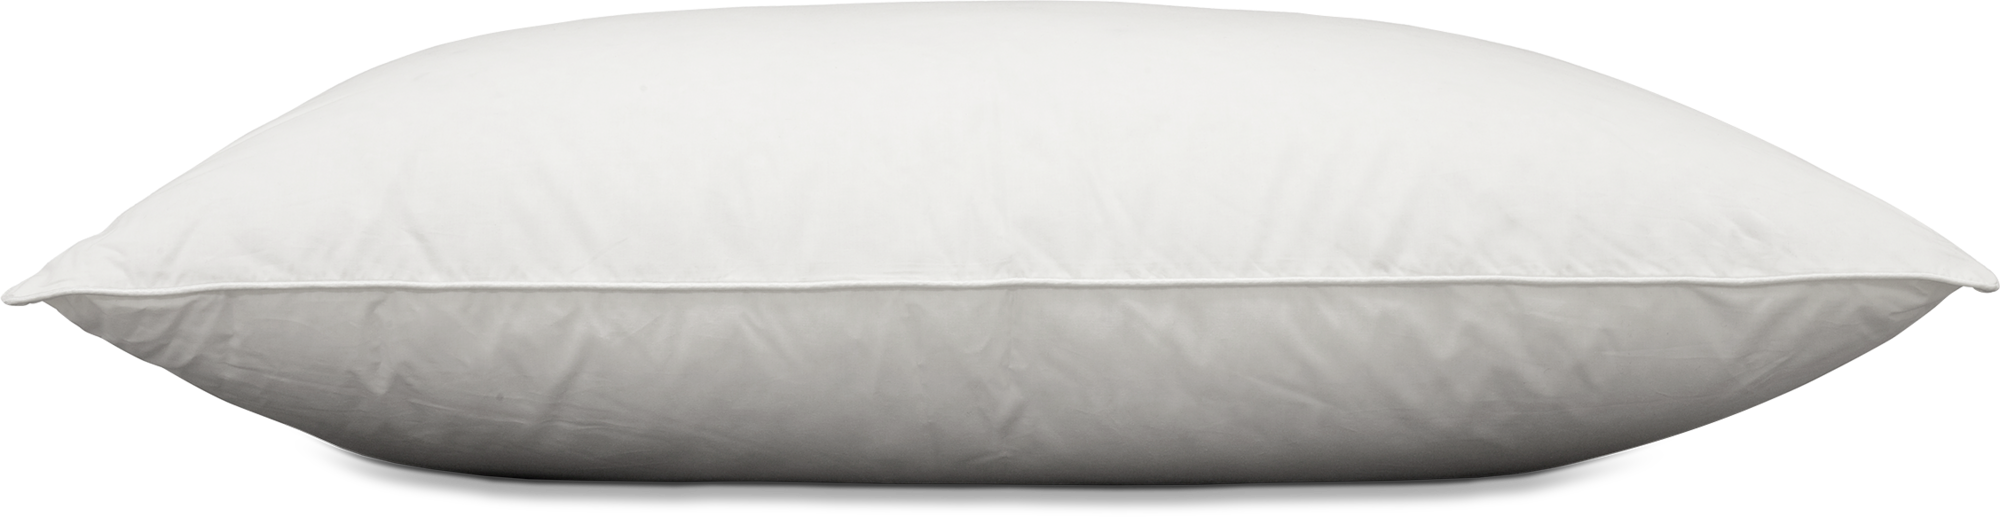 Slettvoll pillows